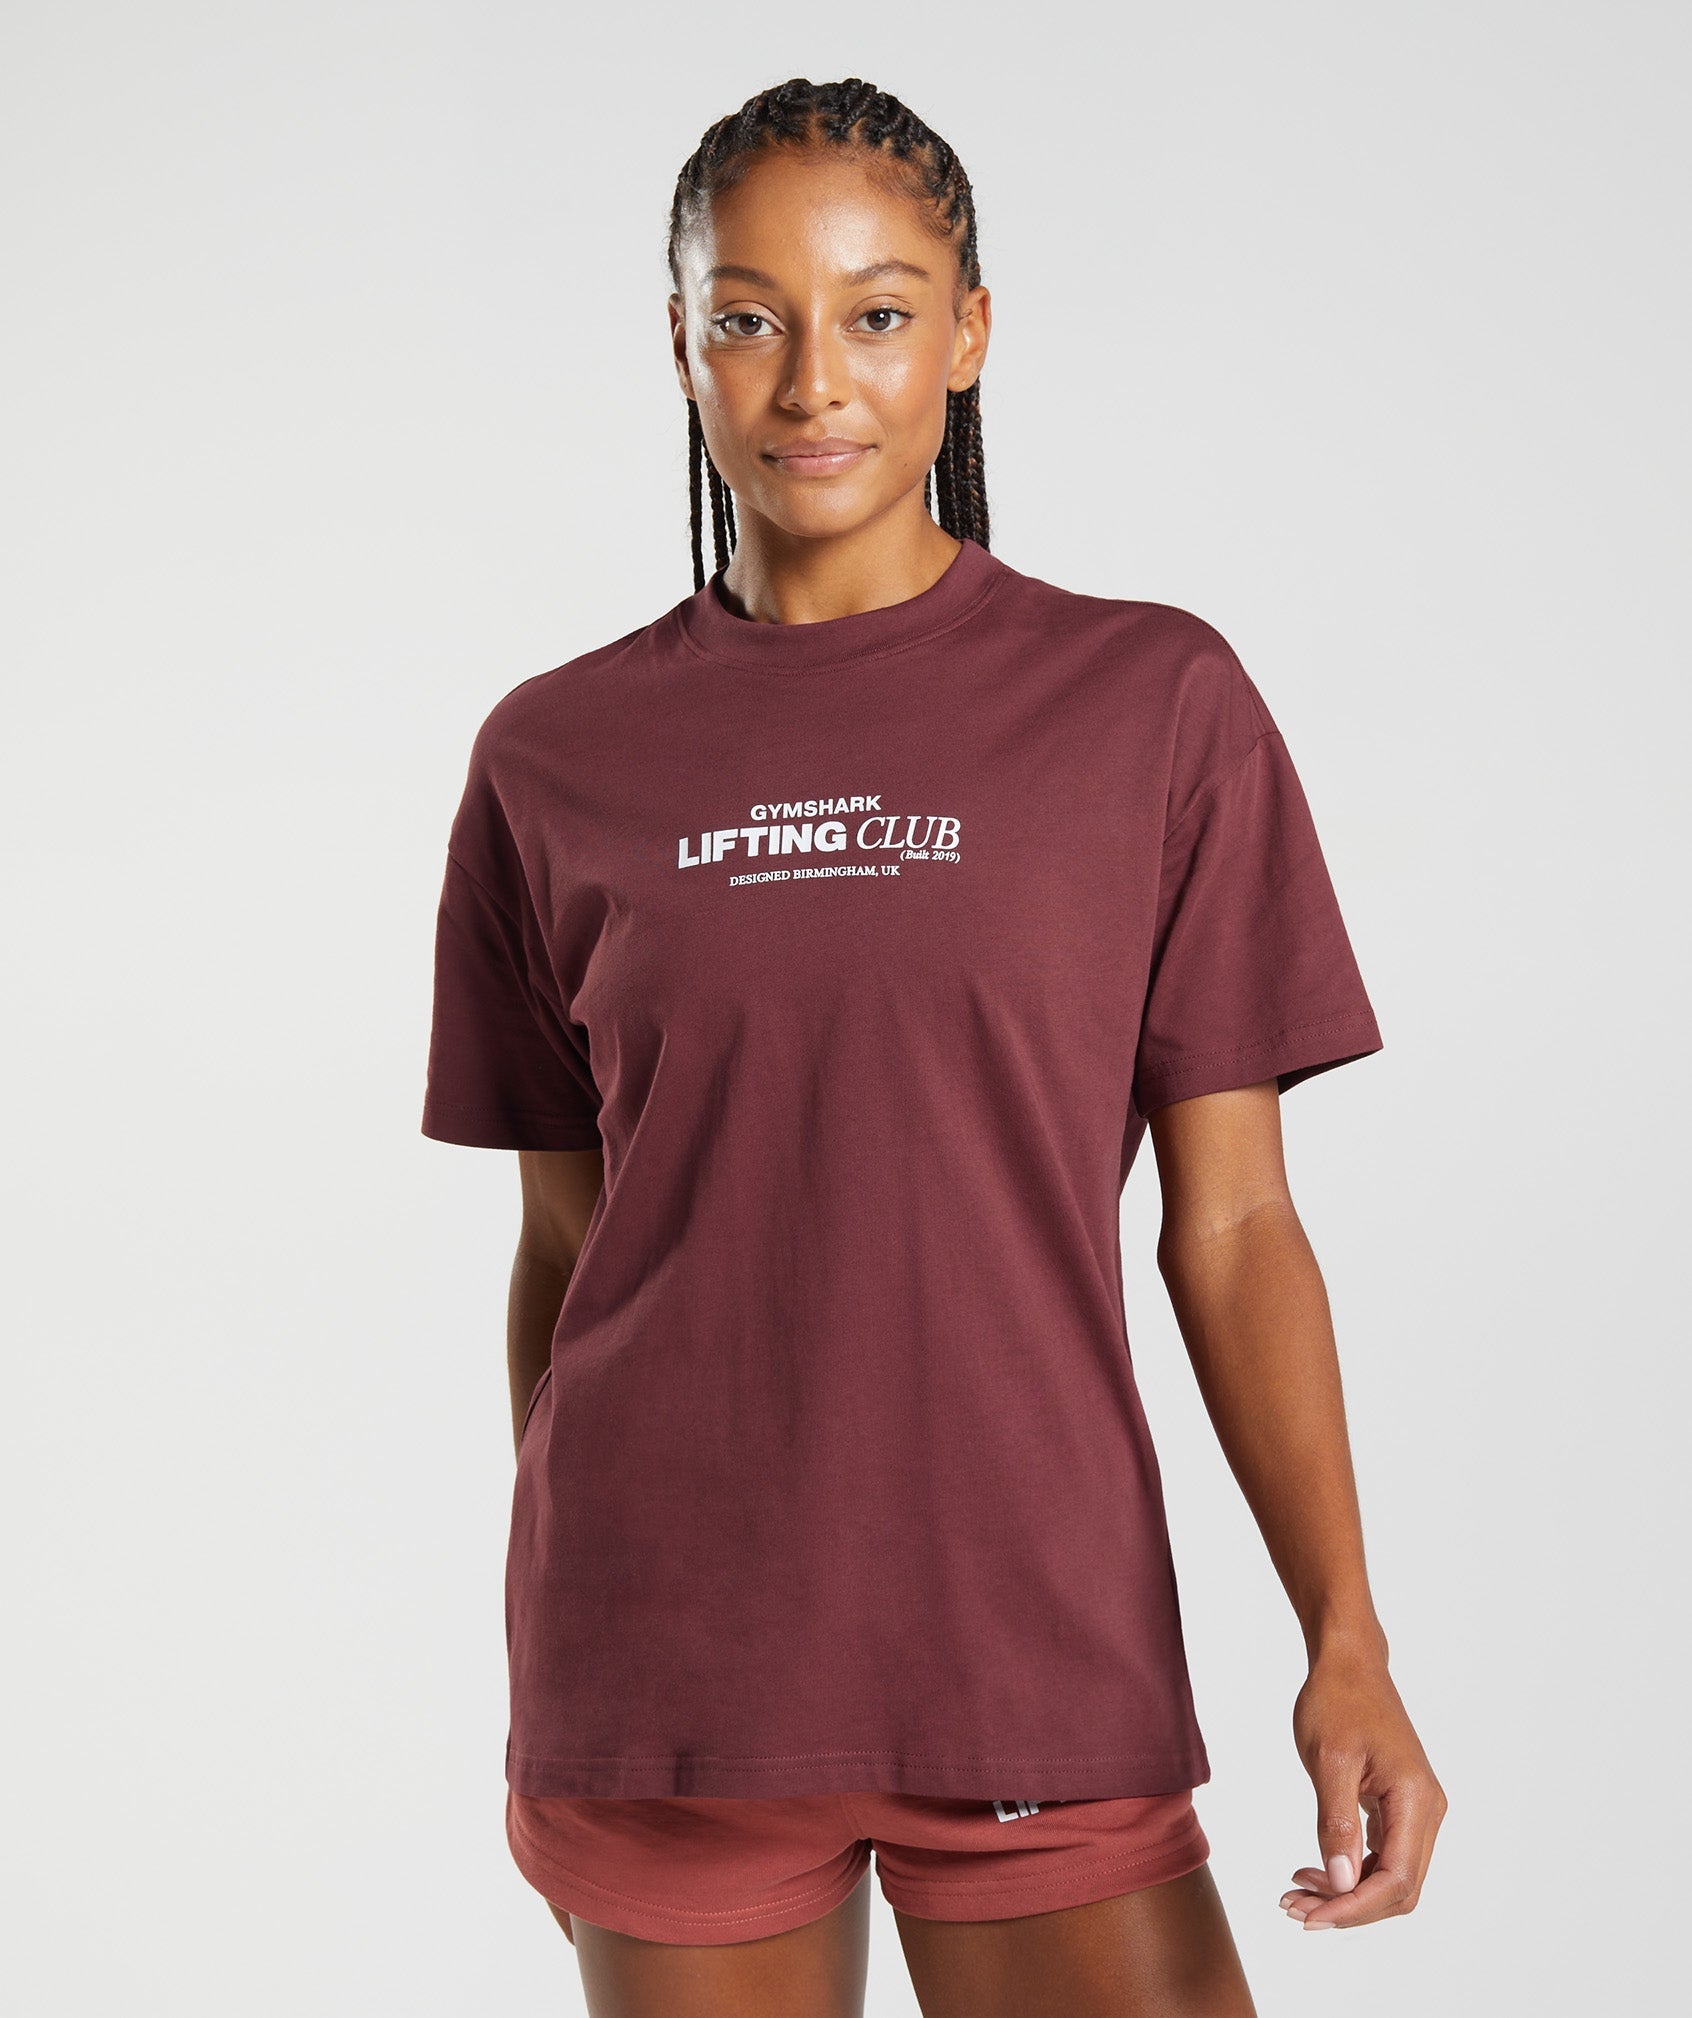 Gymshark Recess T-Shirt - Cherry Brown/White